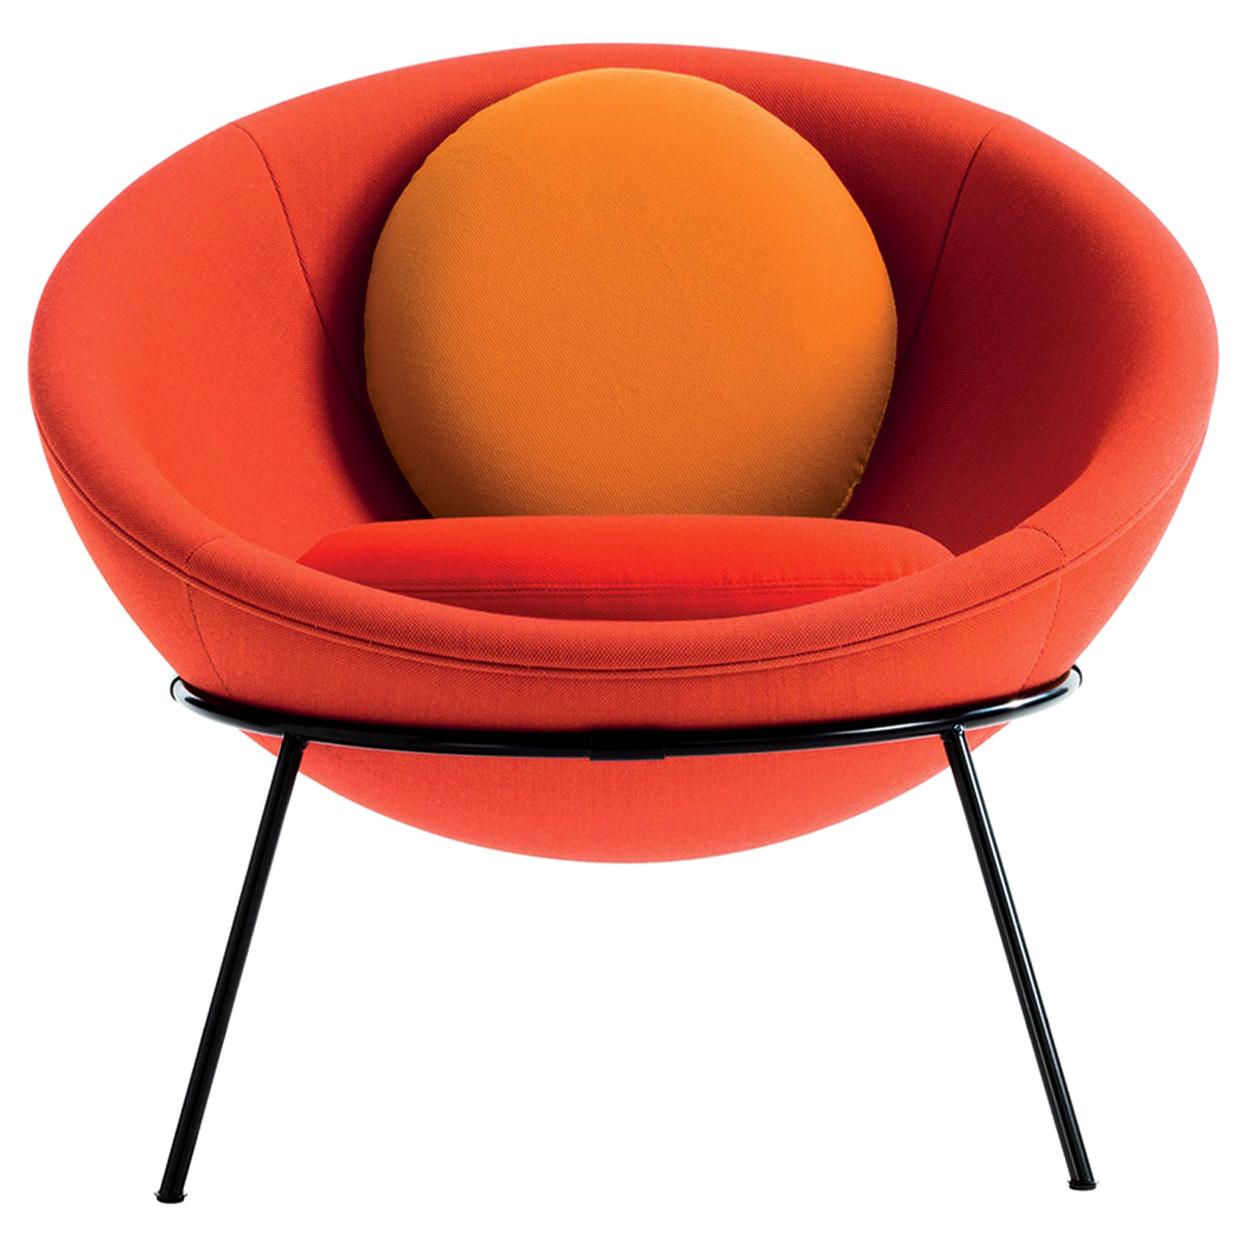 Bardi's Bowl Chair Orange Nuance